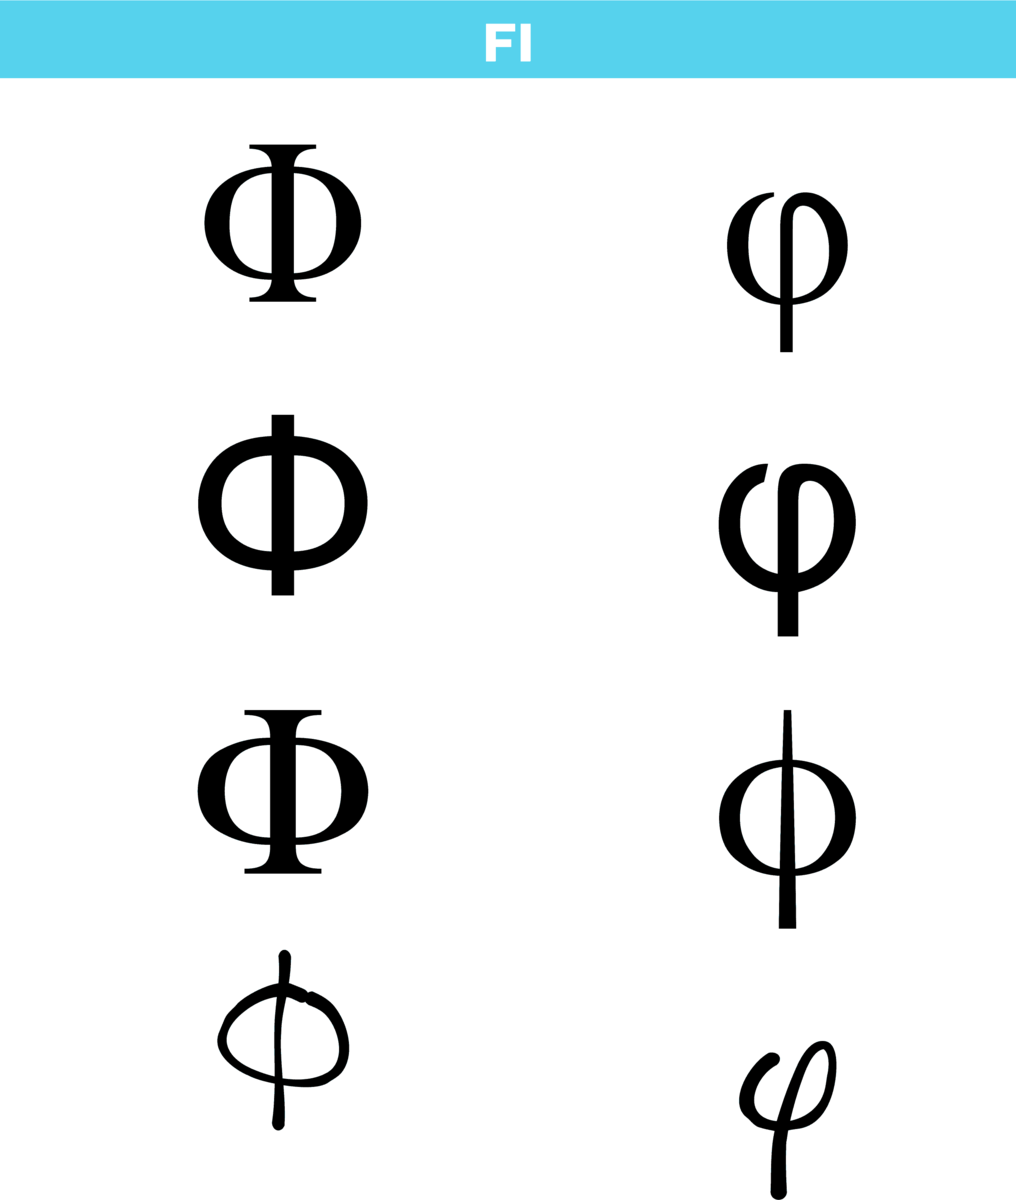 Bokstaven fi i det greske alfabetet i ulike skrifttyper